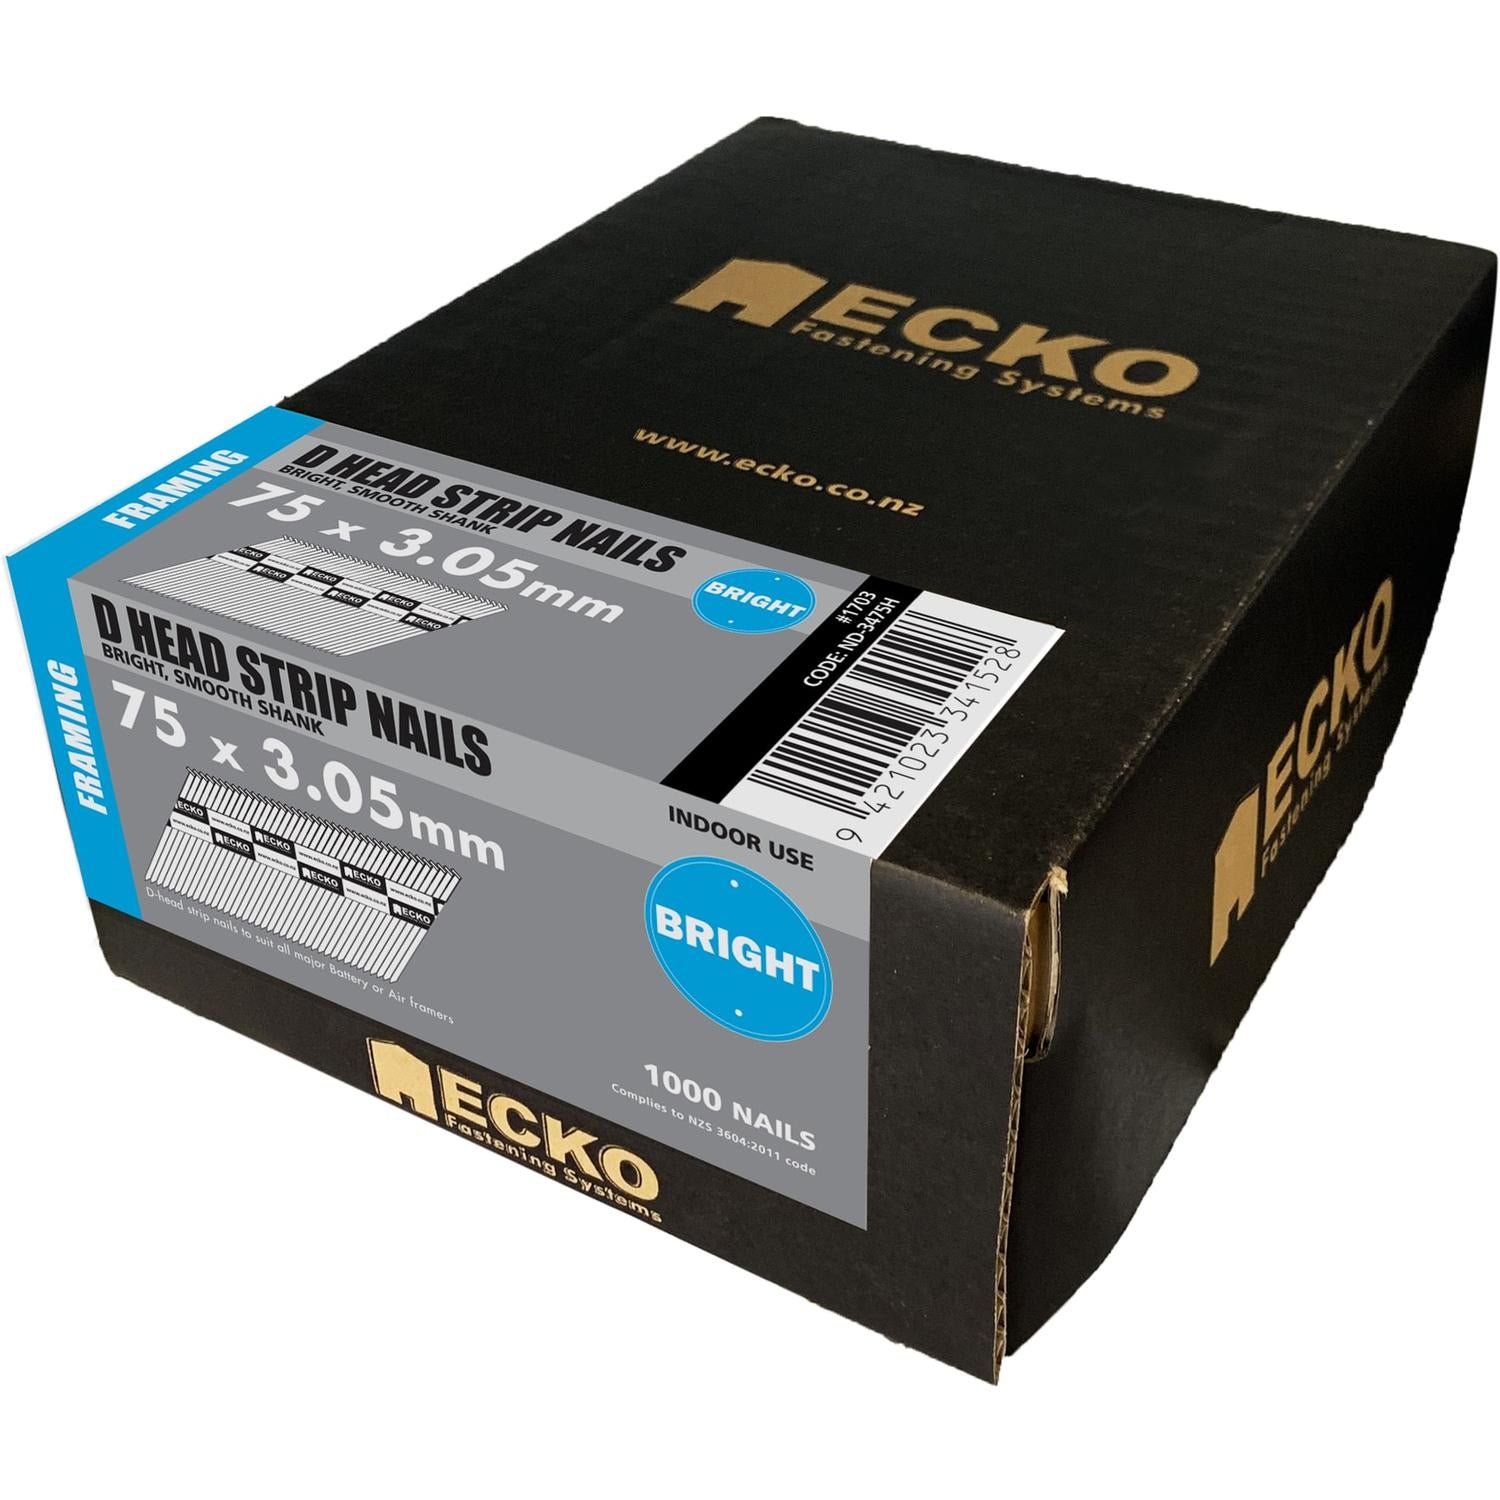 Ecko Framing Nails 75 X 3.05Mm Bright - Gasless Pack (1000 Box)